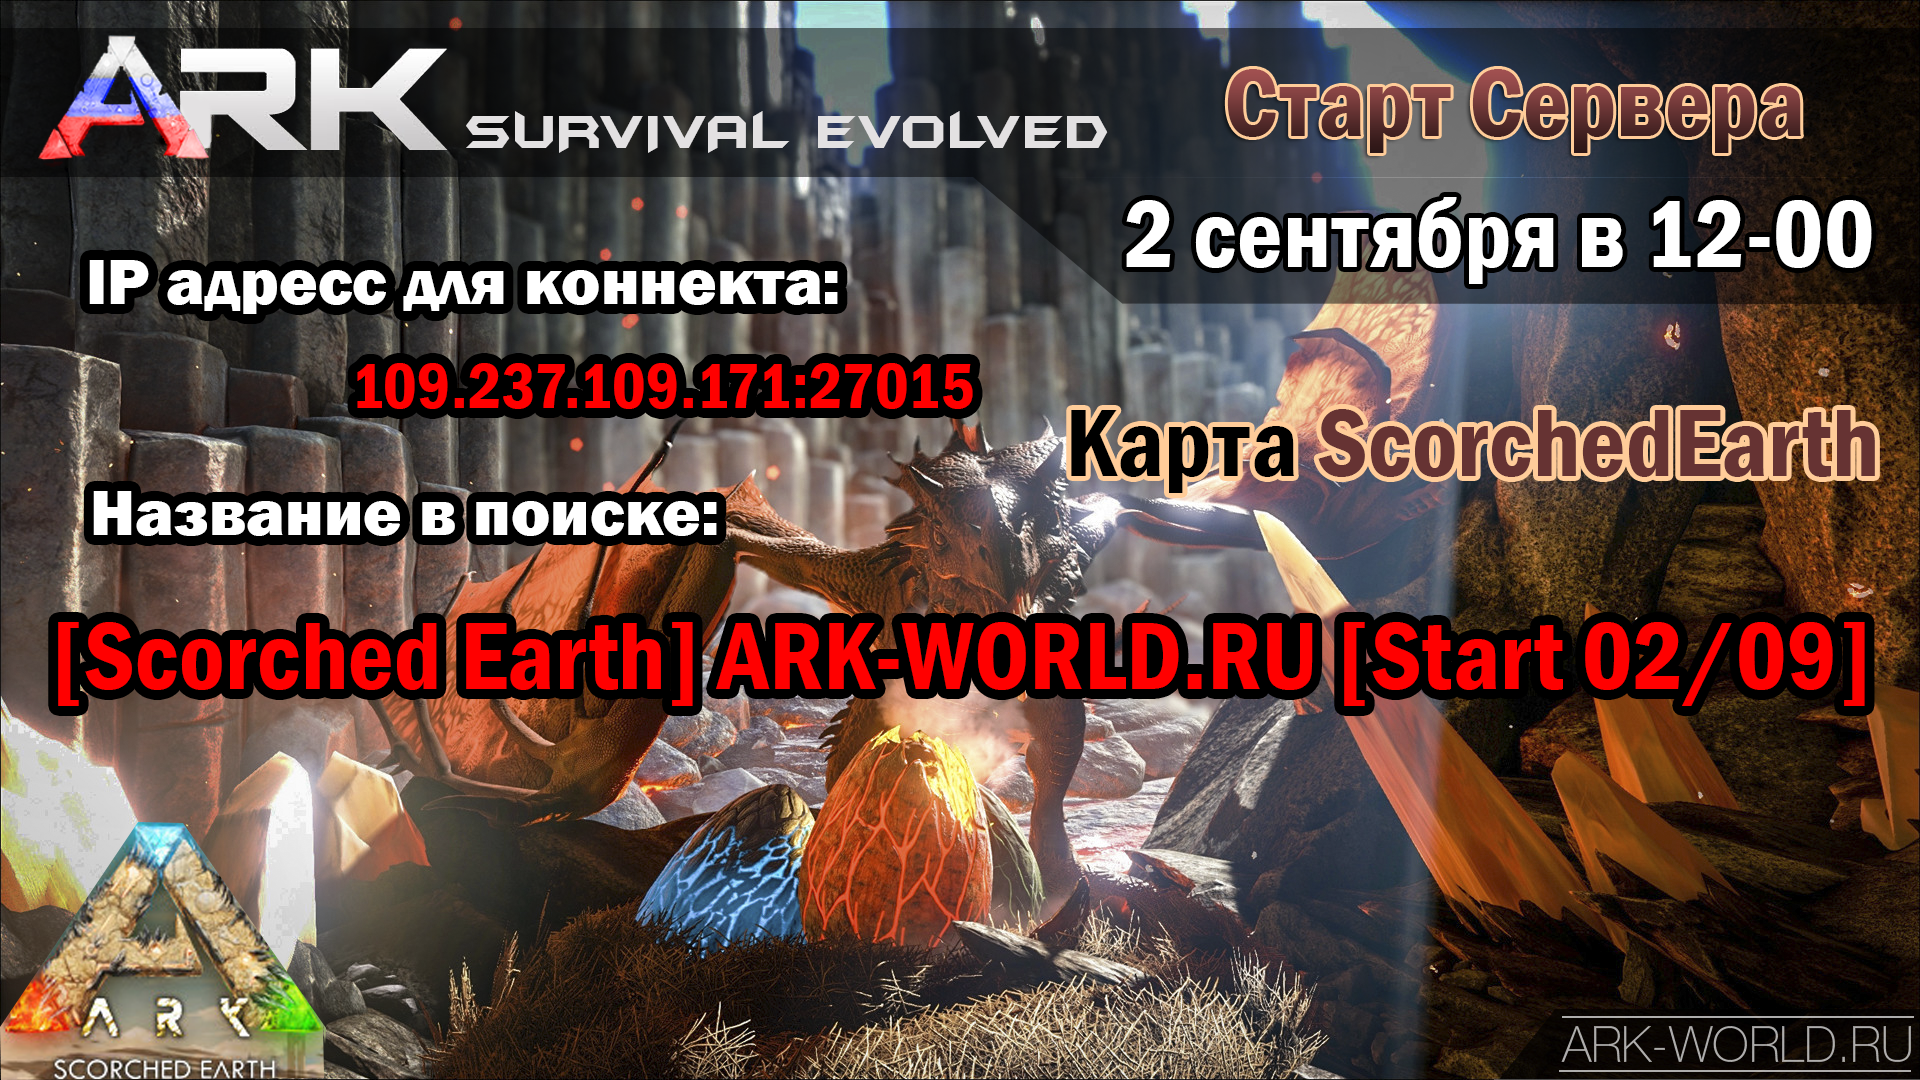 Start Servera Scorched Earth Ark World Ru Ark Survival Evolved Russkij Sajt Igry